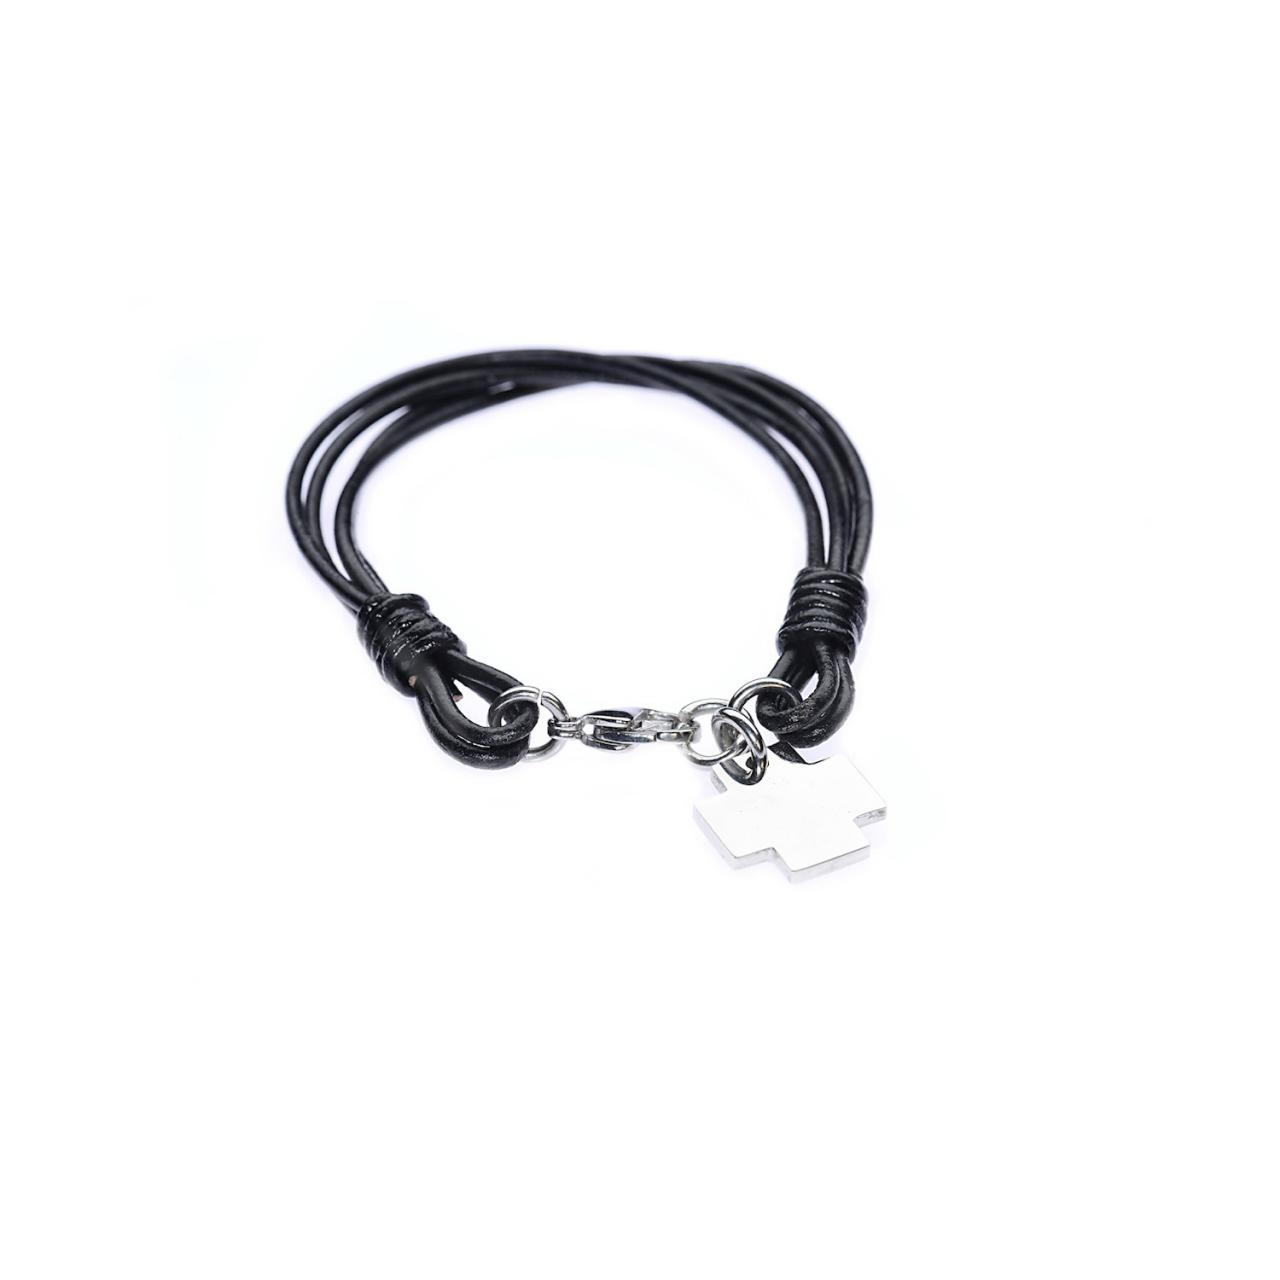 Leather Bracelet / Black Bracelet / Rope Bracelet / Cross Charm / Edgy Bracelet / Goth Bracelet / Goth Jewelry / Simple Bracelet / Silver